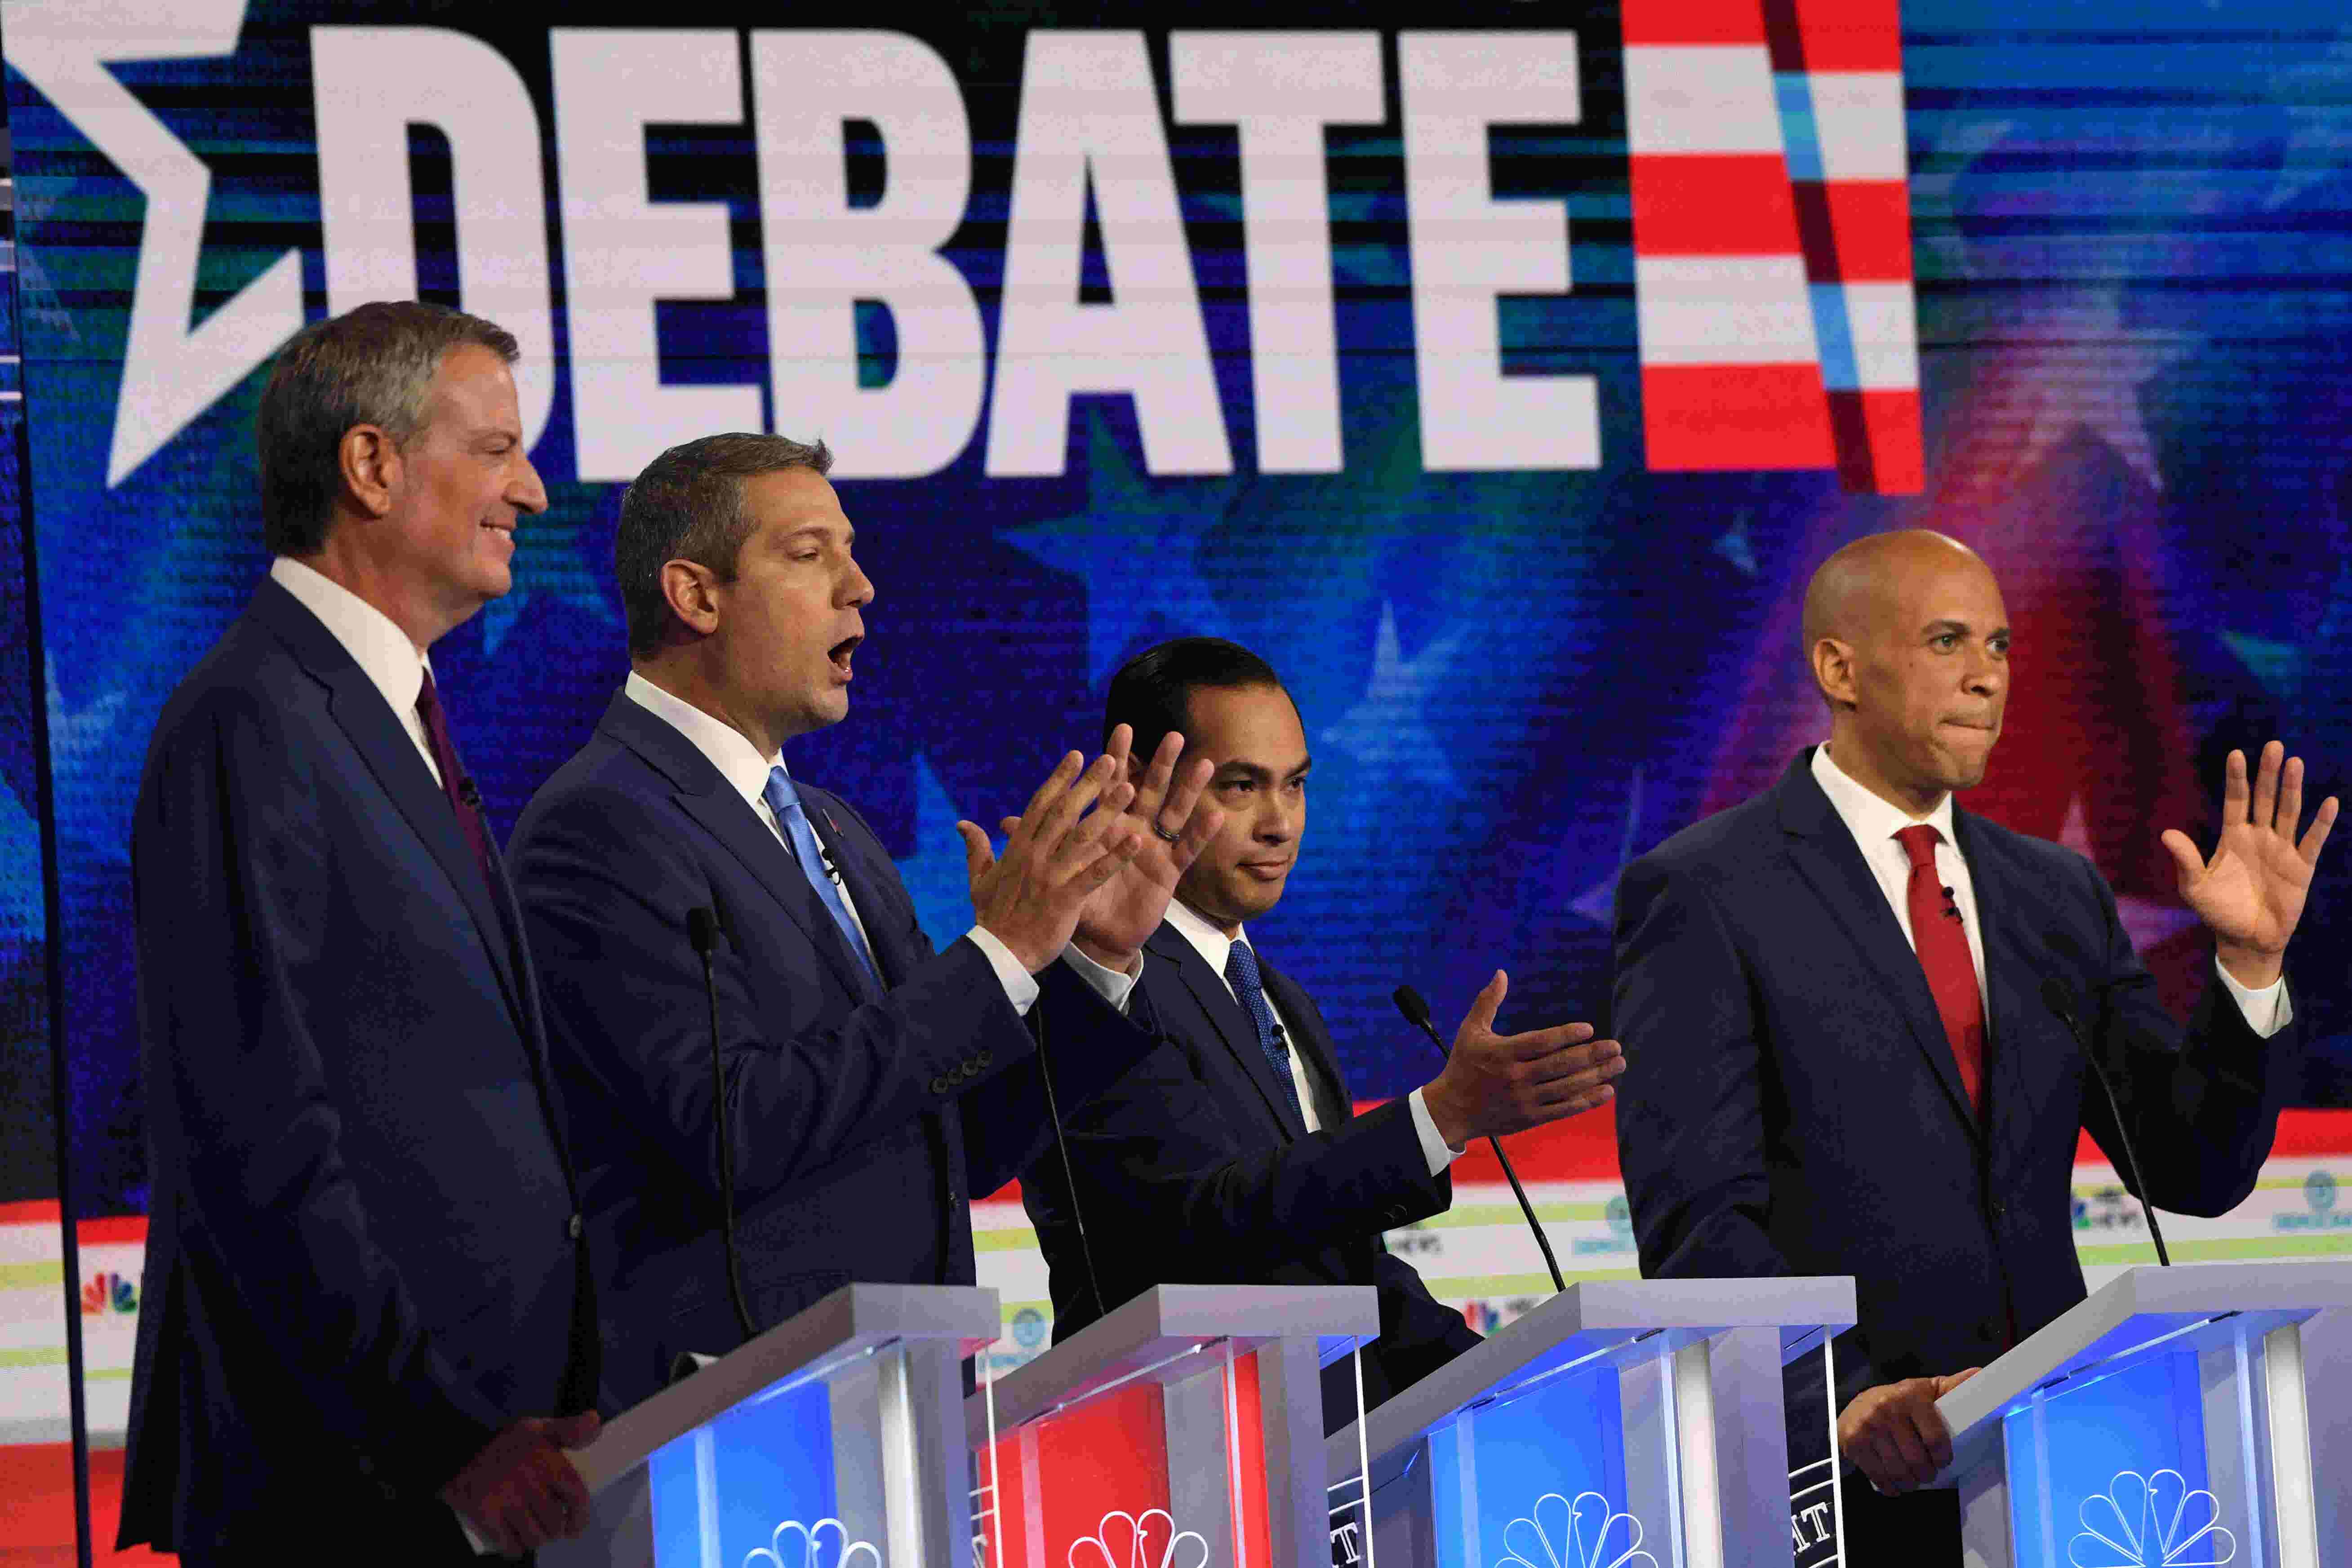 Democratic debate highlights, best moments